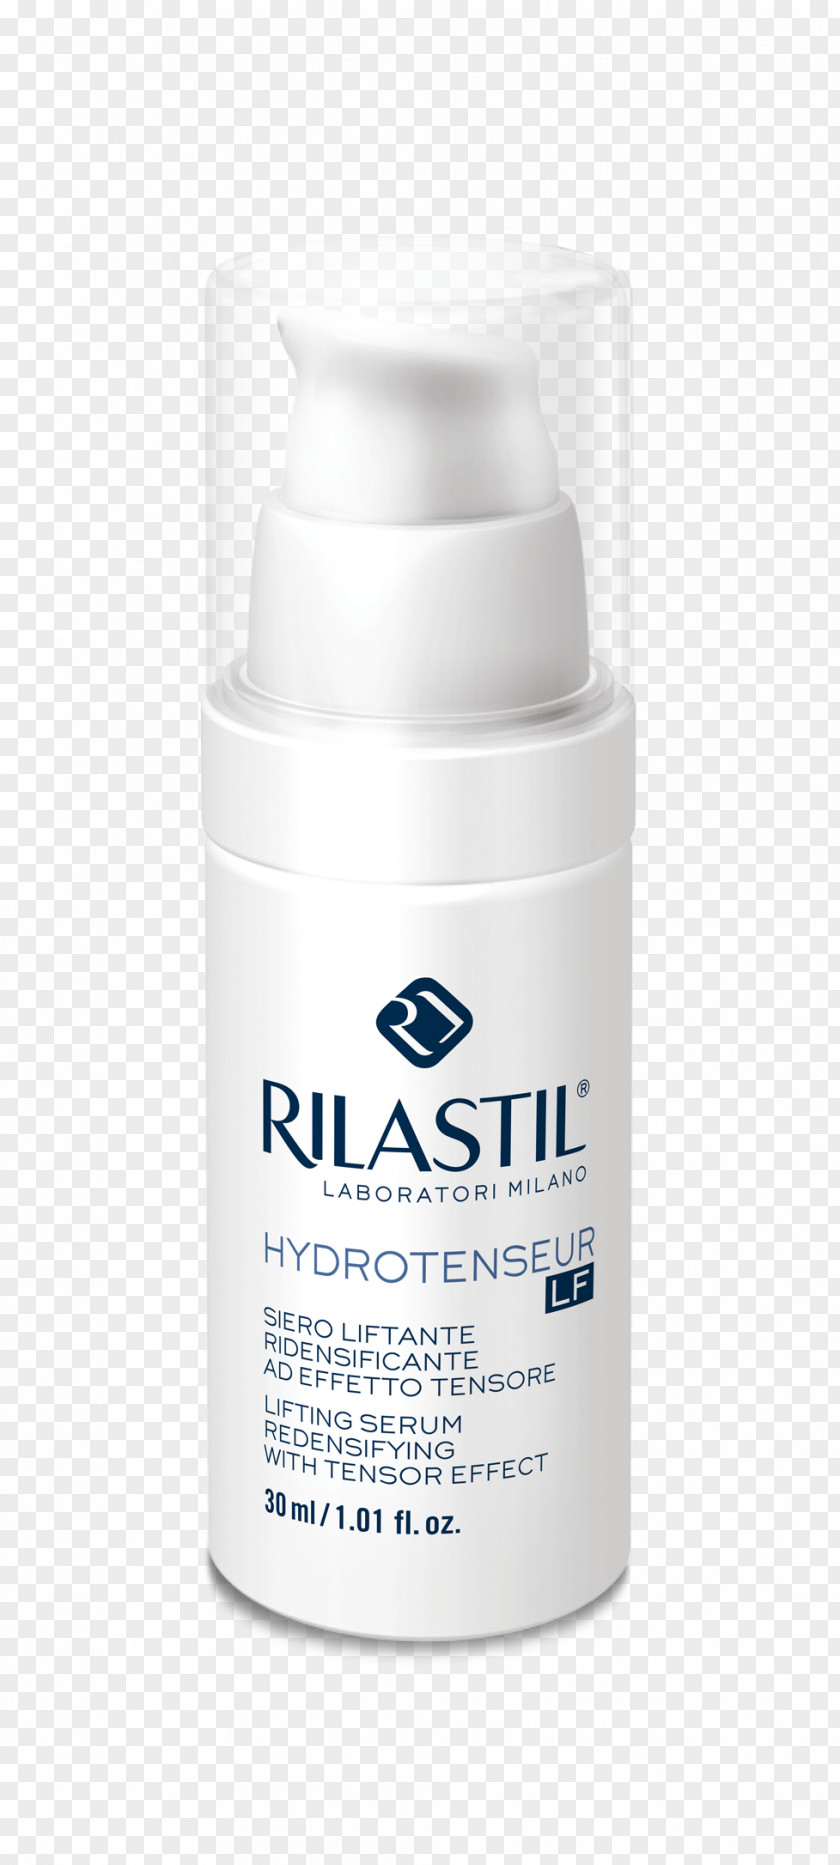 Face Rilastil Cosmetics Algenist Retinol Firming & Lifting Serum Rhytidectomy PNG